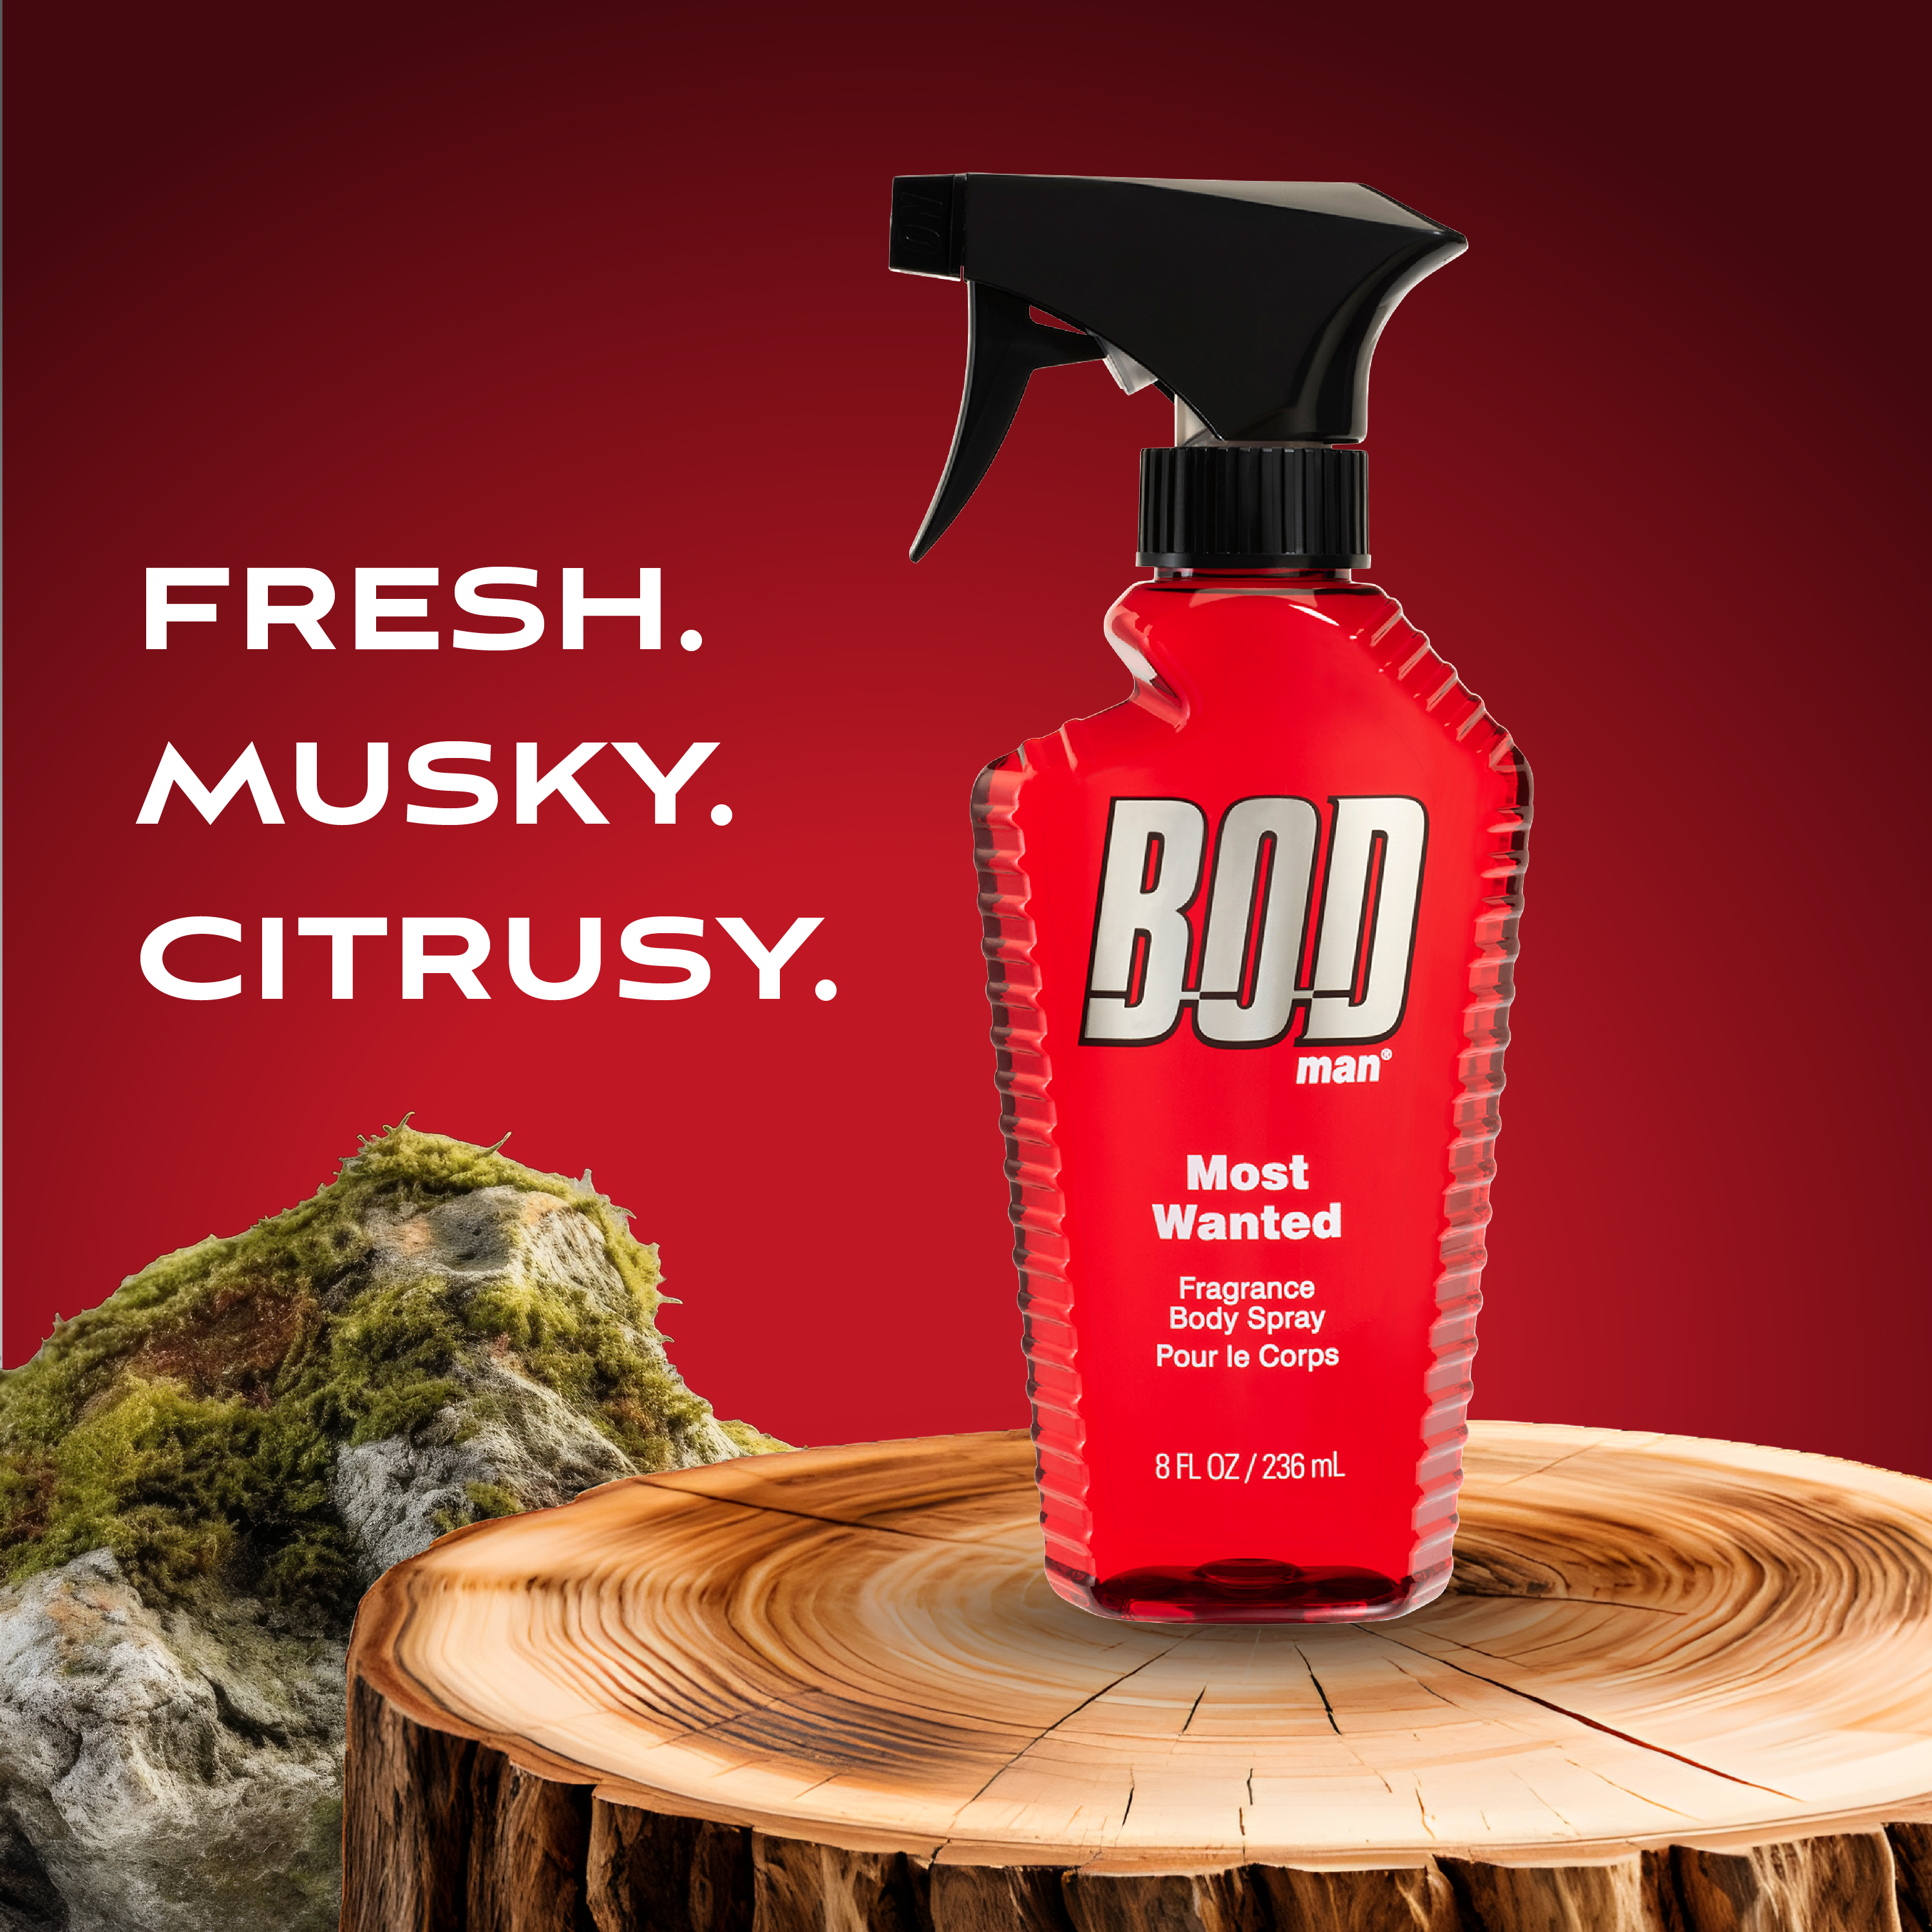 BOD Man Fragrance Body Spray, Most Wanted, 8 fl oz - image 2 of 7